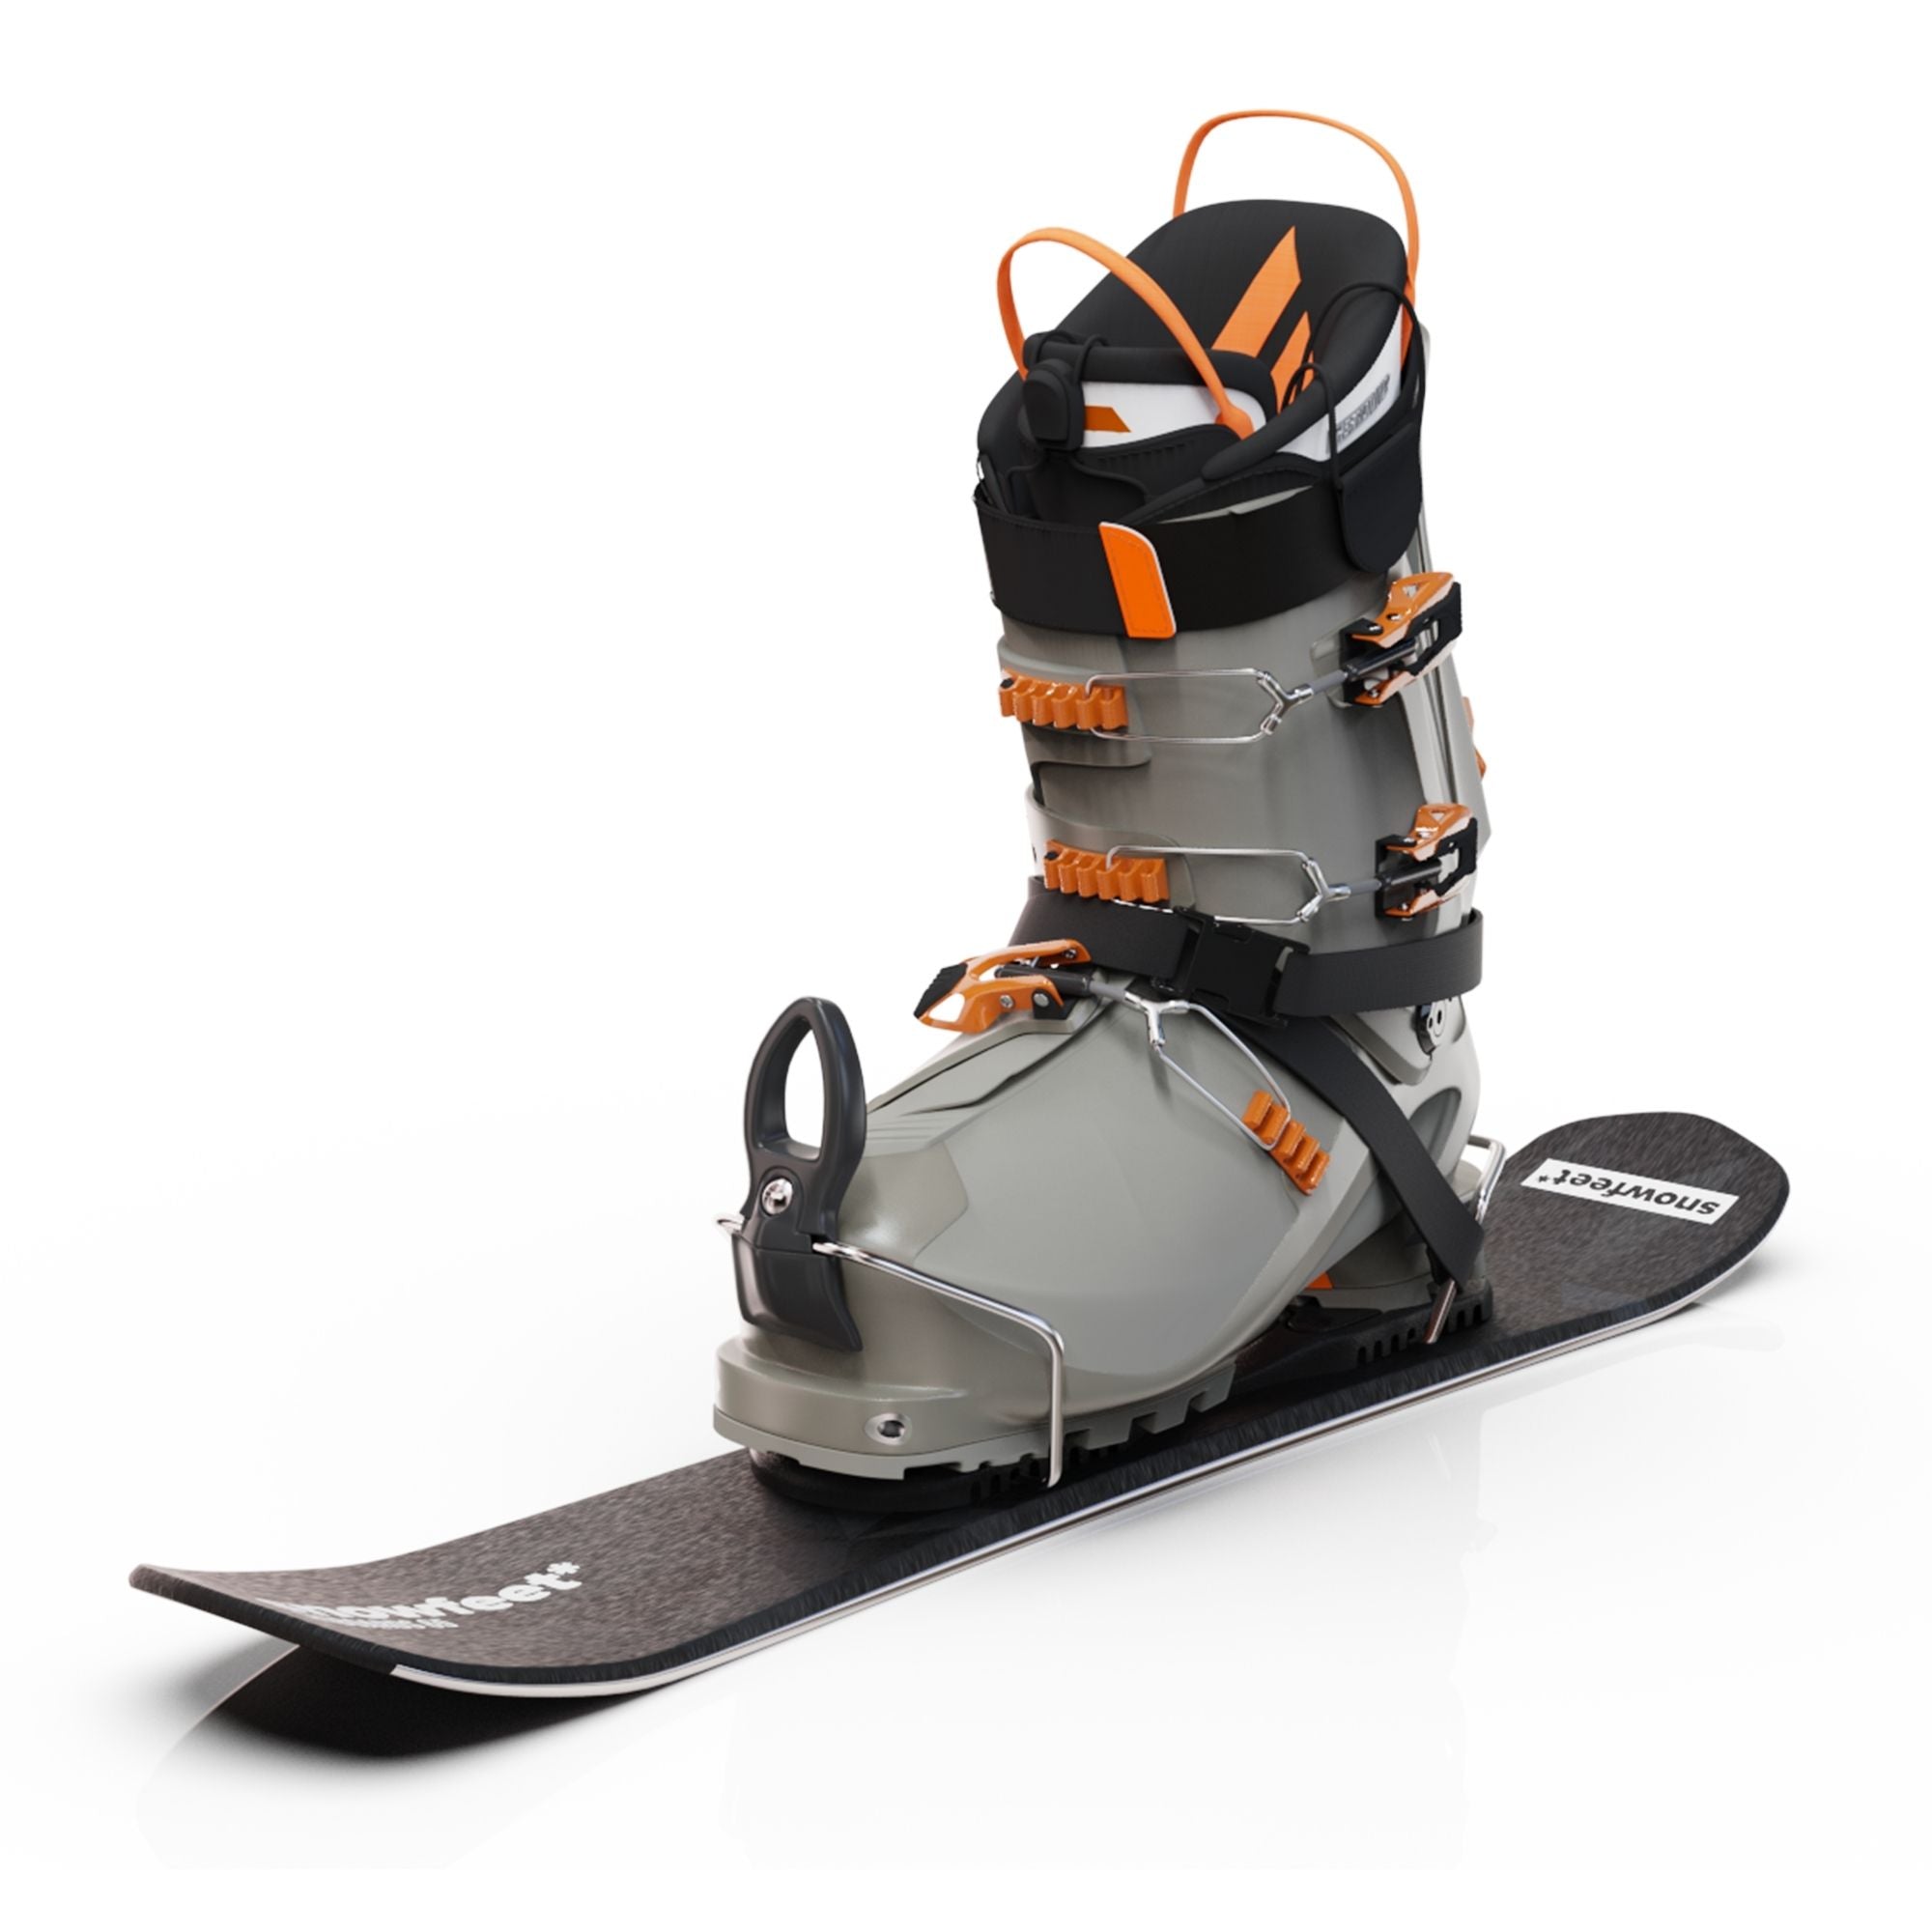 snowfeet-snowblades-for-snowboard-boots-black-skiboards-shortski-65cm